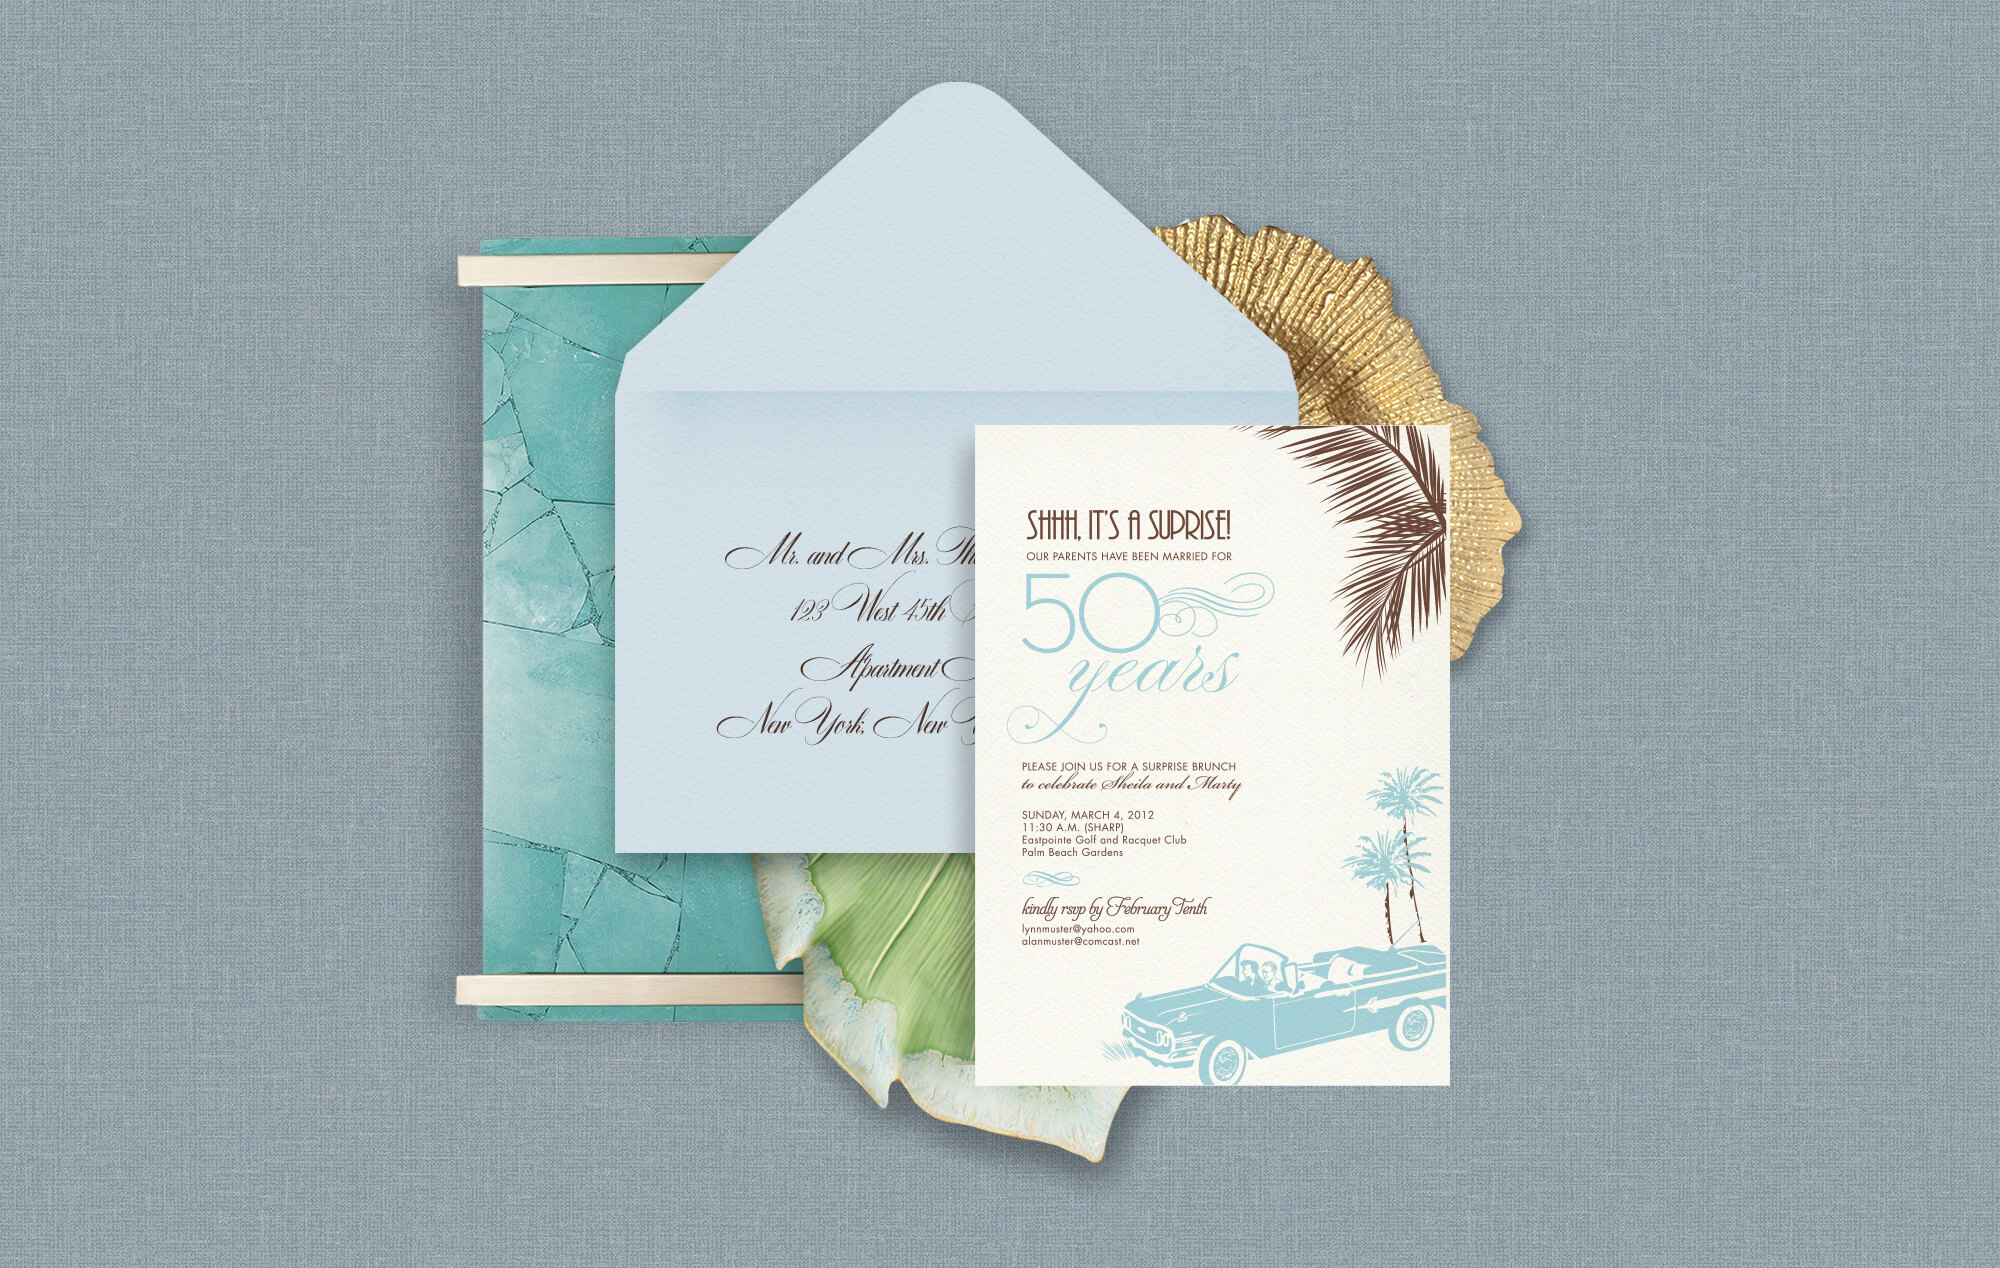 Palm Beach vintage inspired anniversary invitation